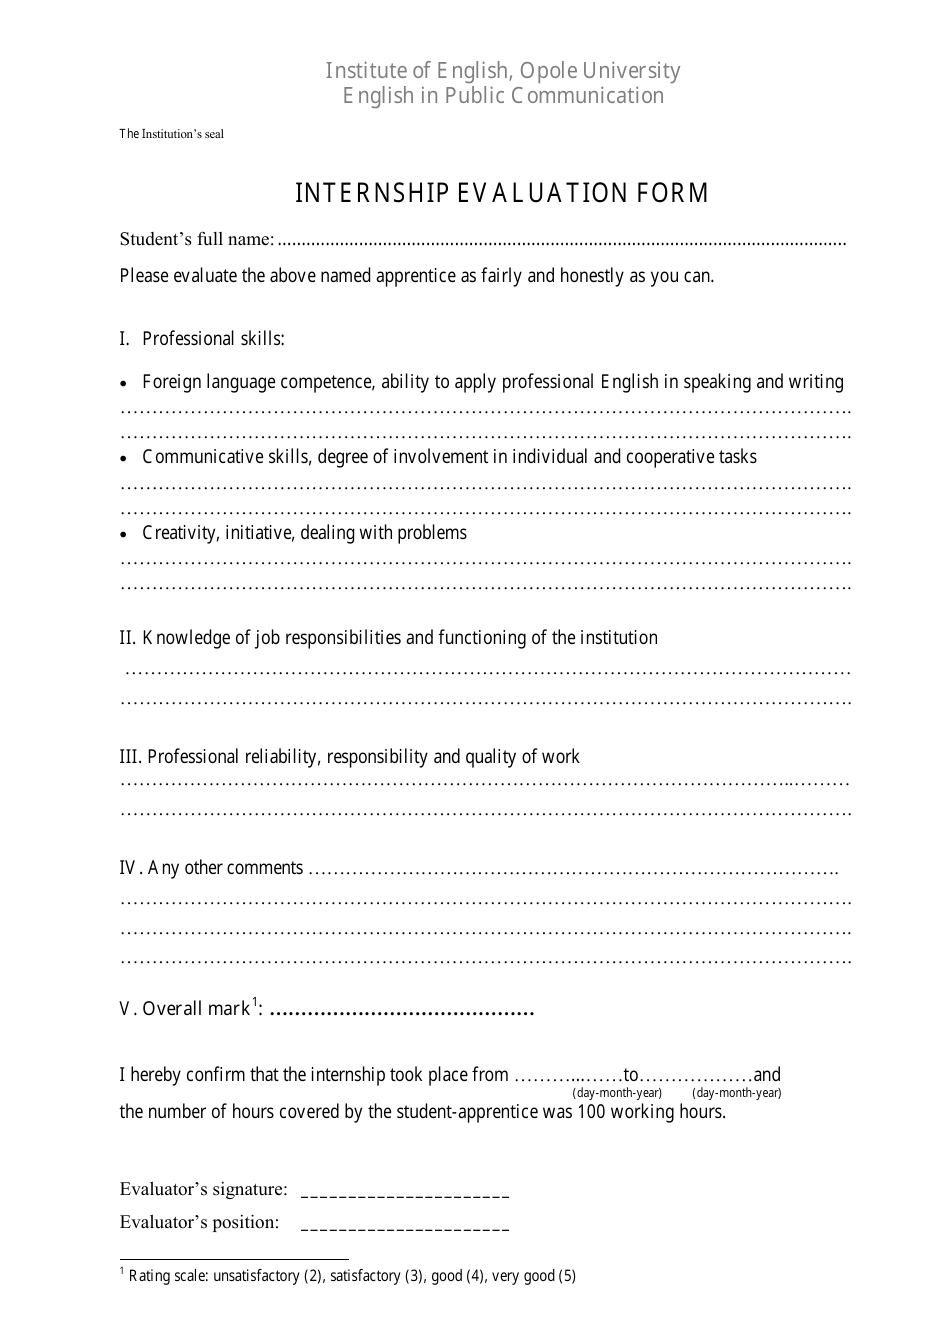 Internship Evaluation Form - Opole University, Page 1